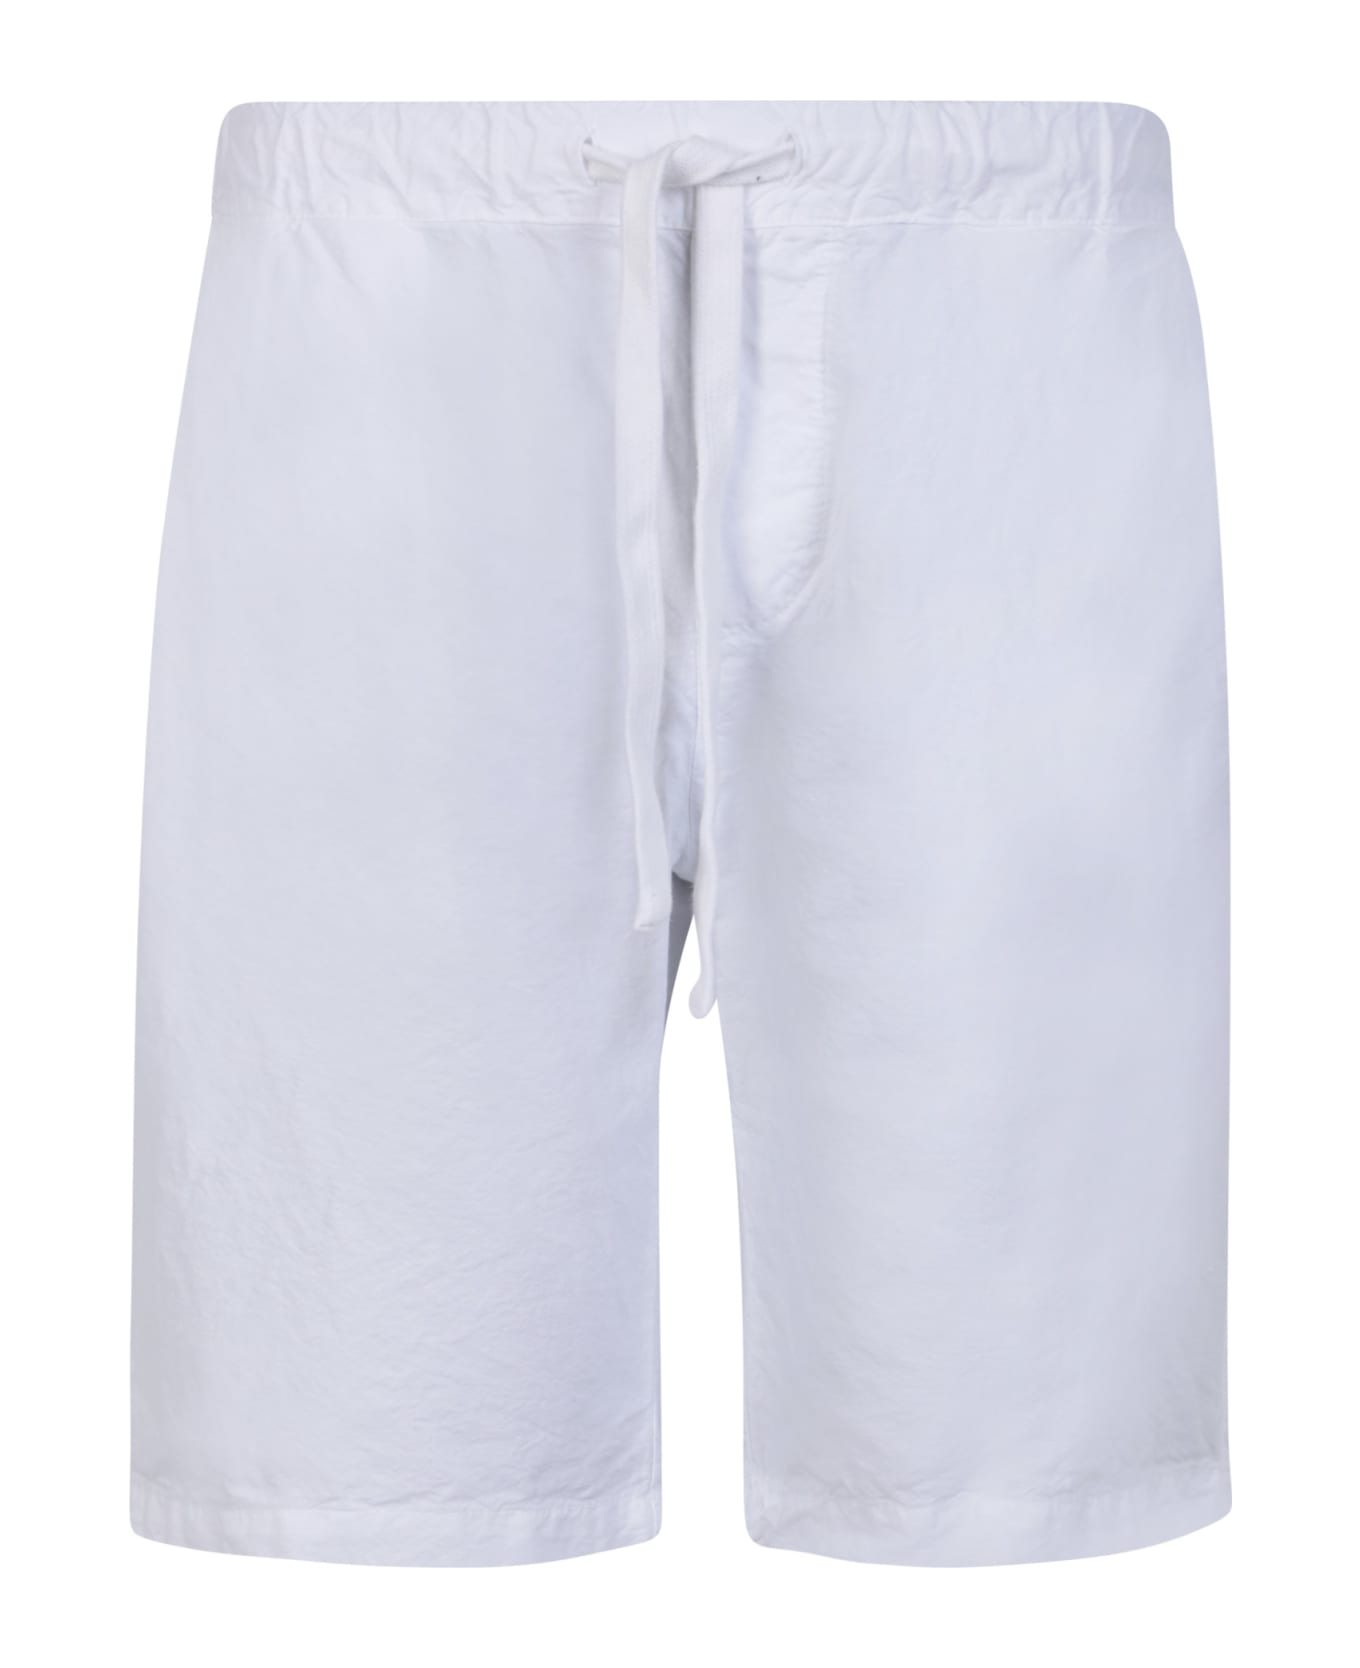 Original Vintage Style White Cotton Bermuda Shorts - White ショートパンツ